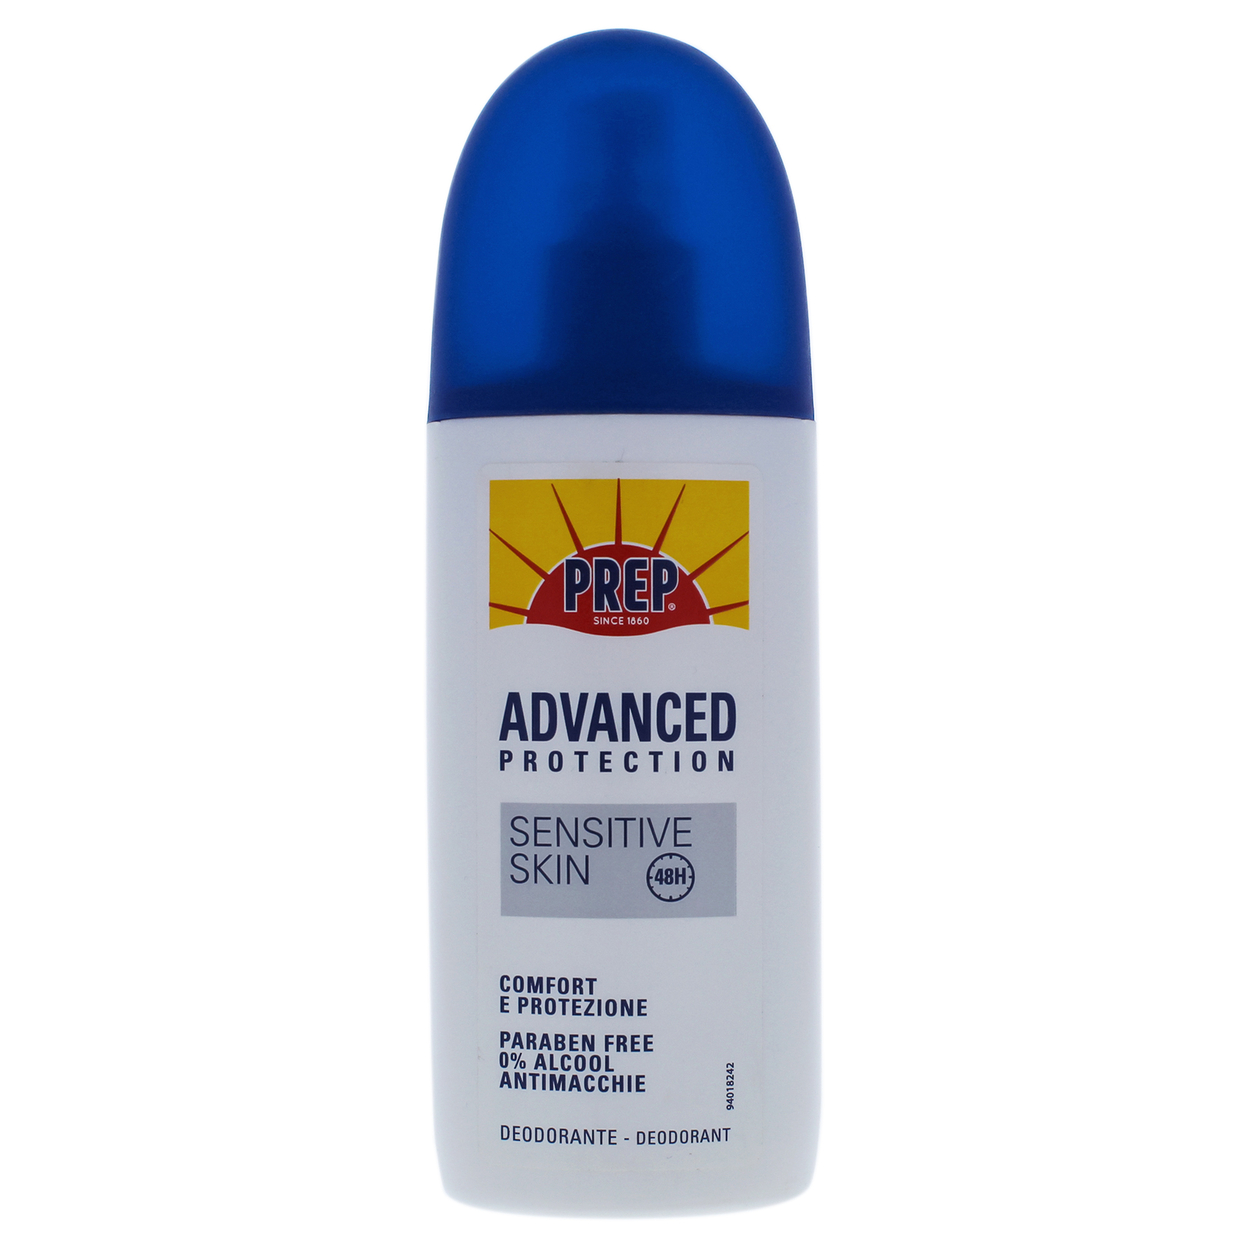 Prep Advanced Protection Sensitive Skin Deodorant Deodorant Spray 3.3 Oz